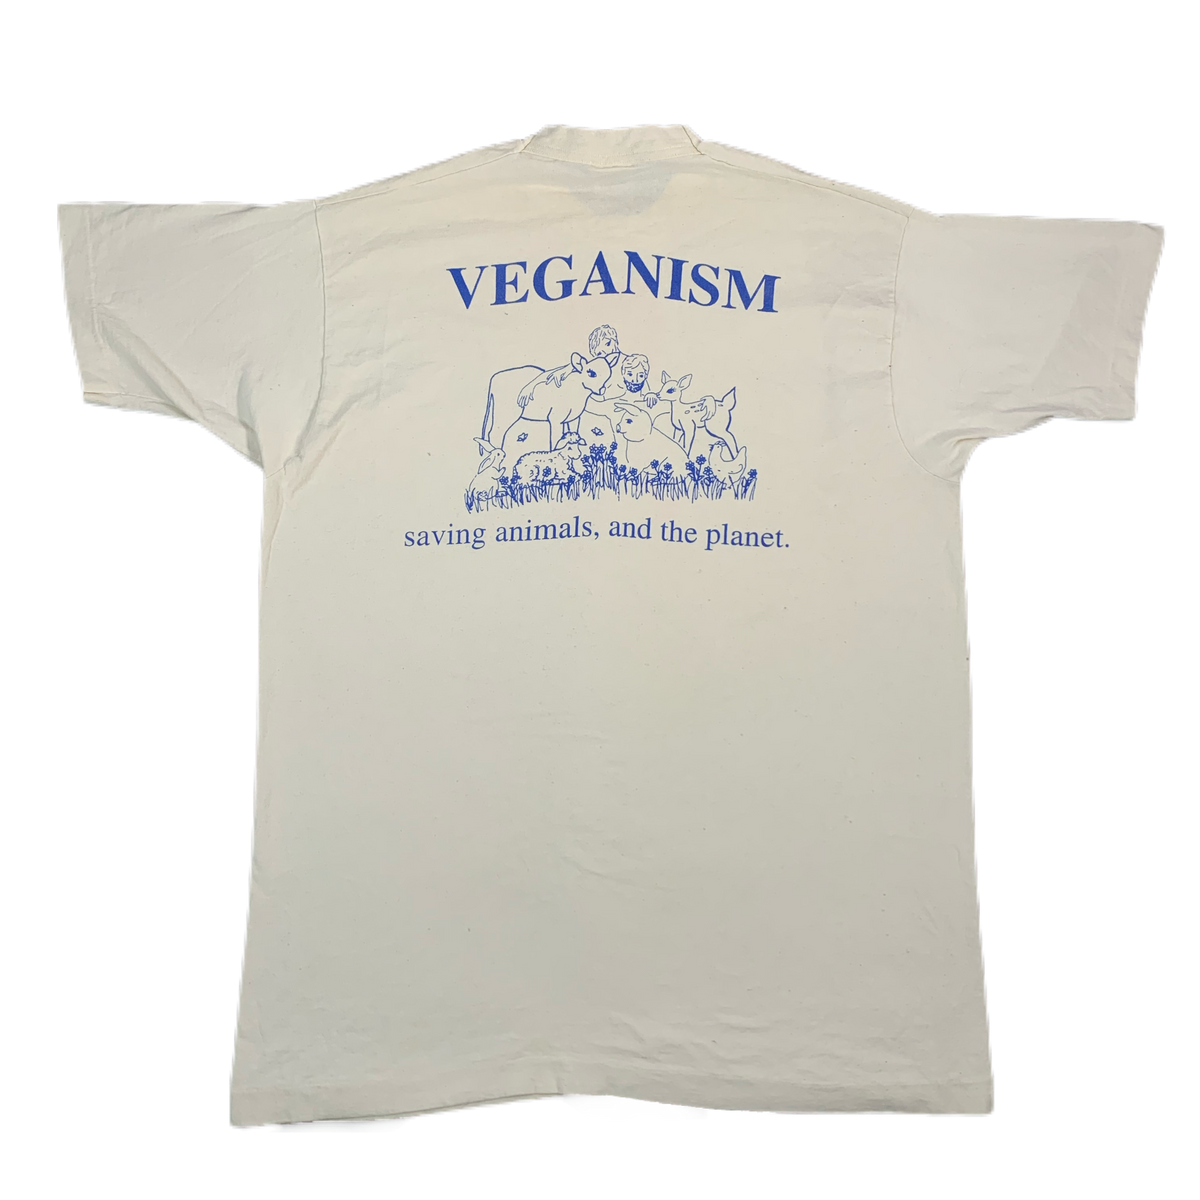 Vintage Veganism “Earth Quencher” T-Shirt - jointcustodydc